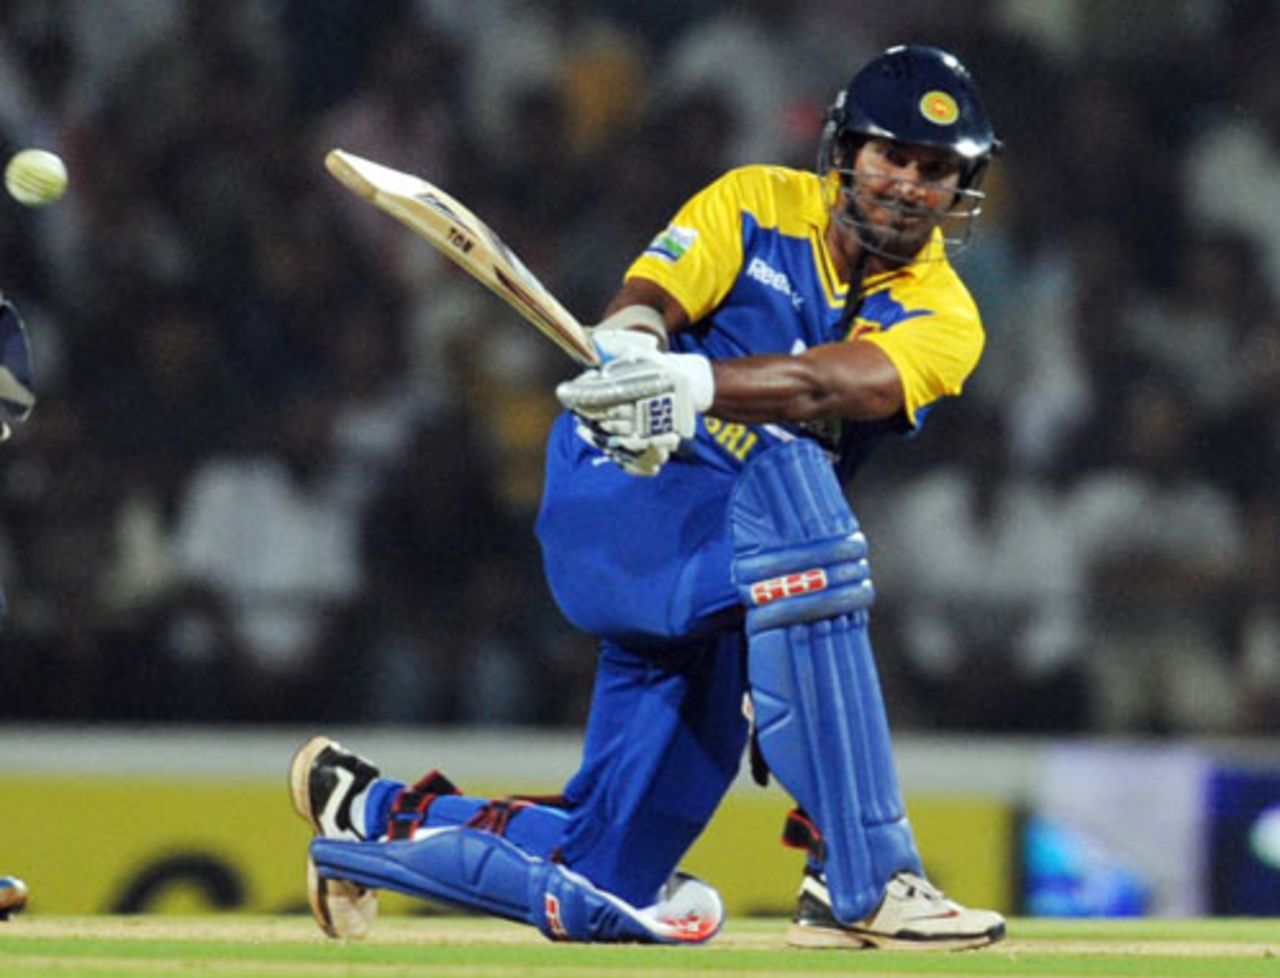 Kumar Sangakkara equalled the record for fastest half-century by a Sri Lankan, India v Sri Lanka, 1st Twenty20, Nagpur, December 9, 2009